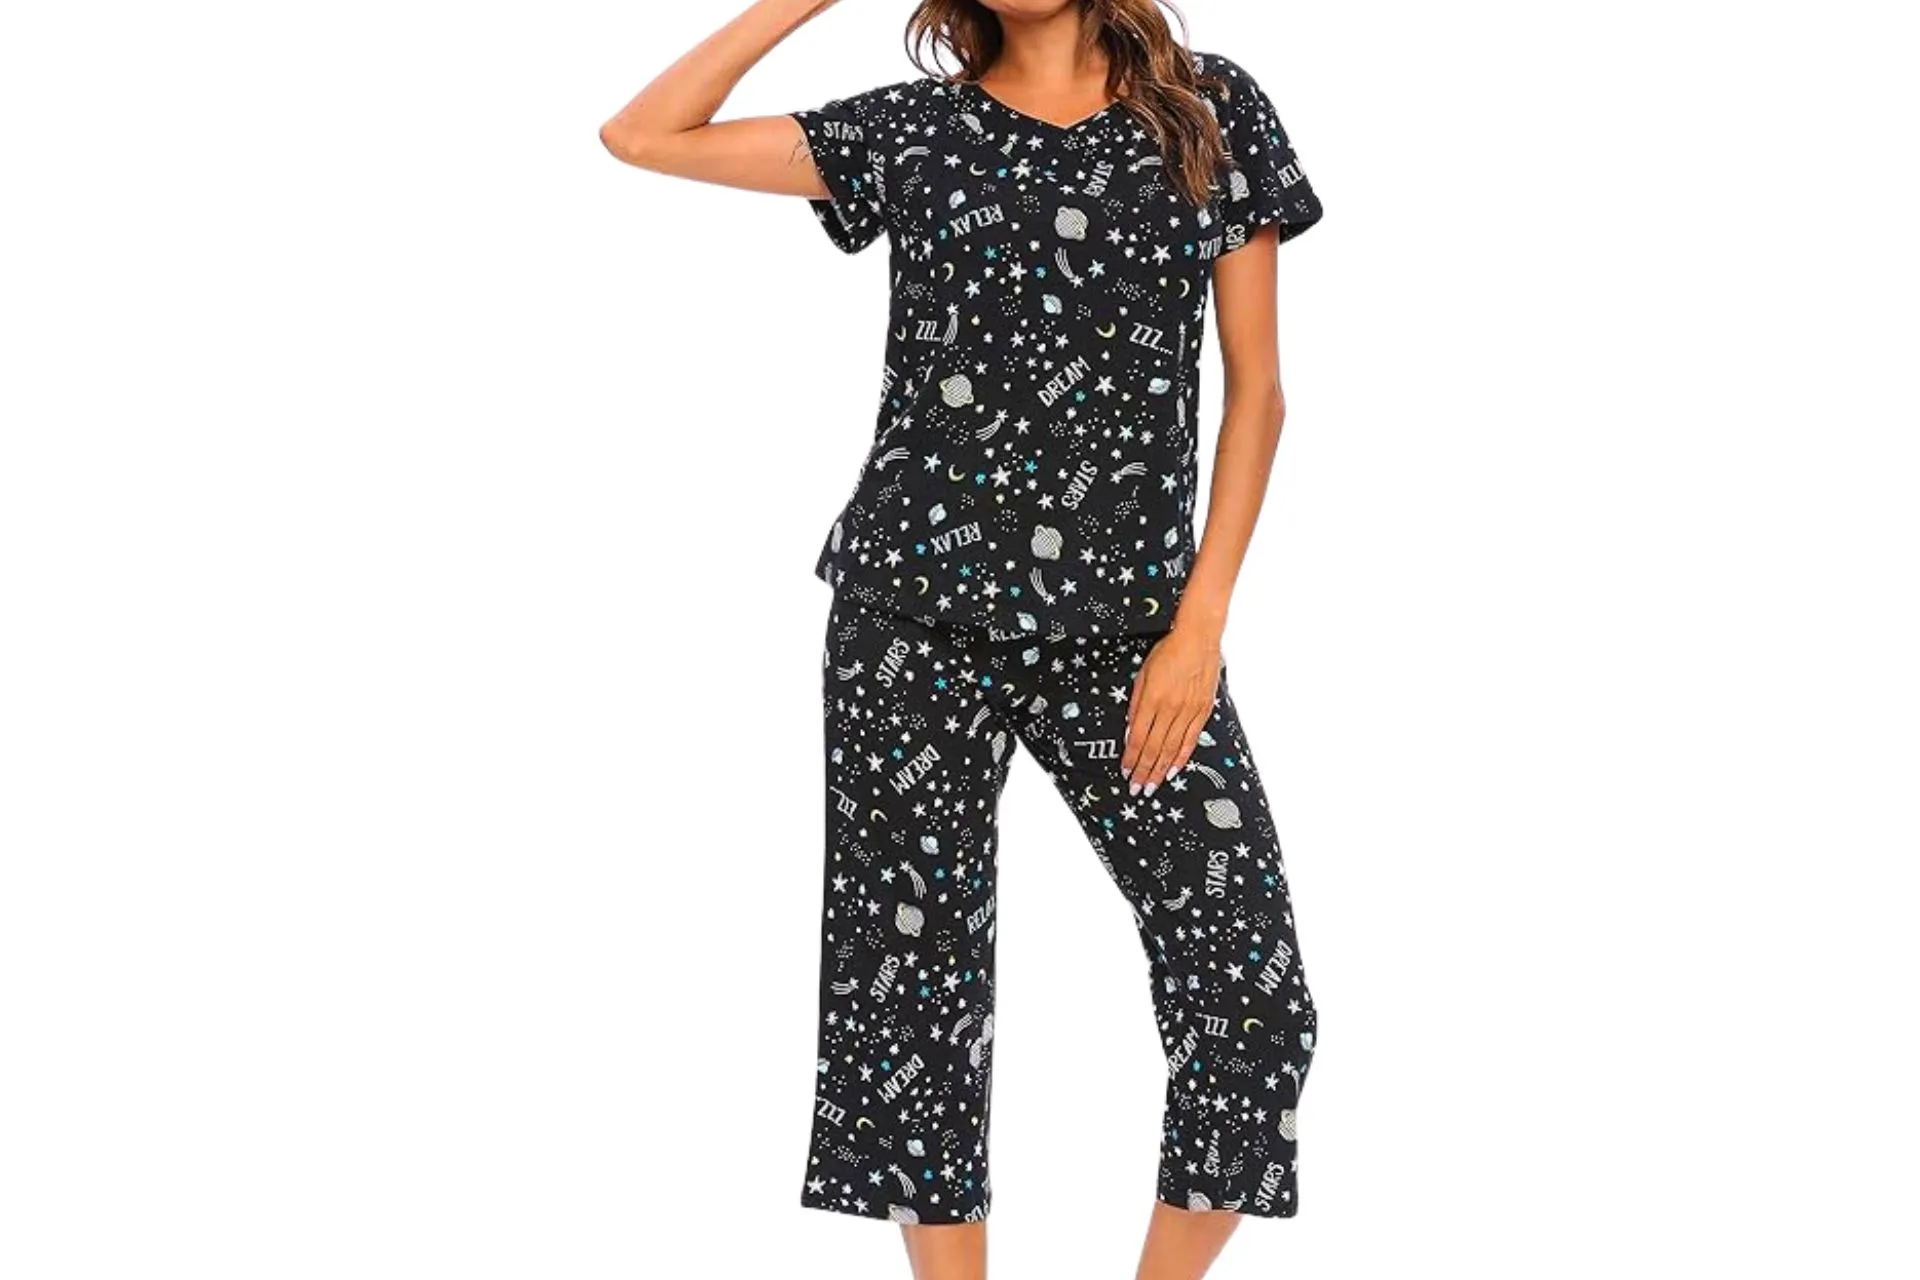 ENJOYNIGHT Women's Sleepwear Tops with Capri Pants Pajama Set